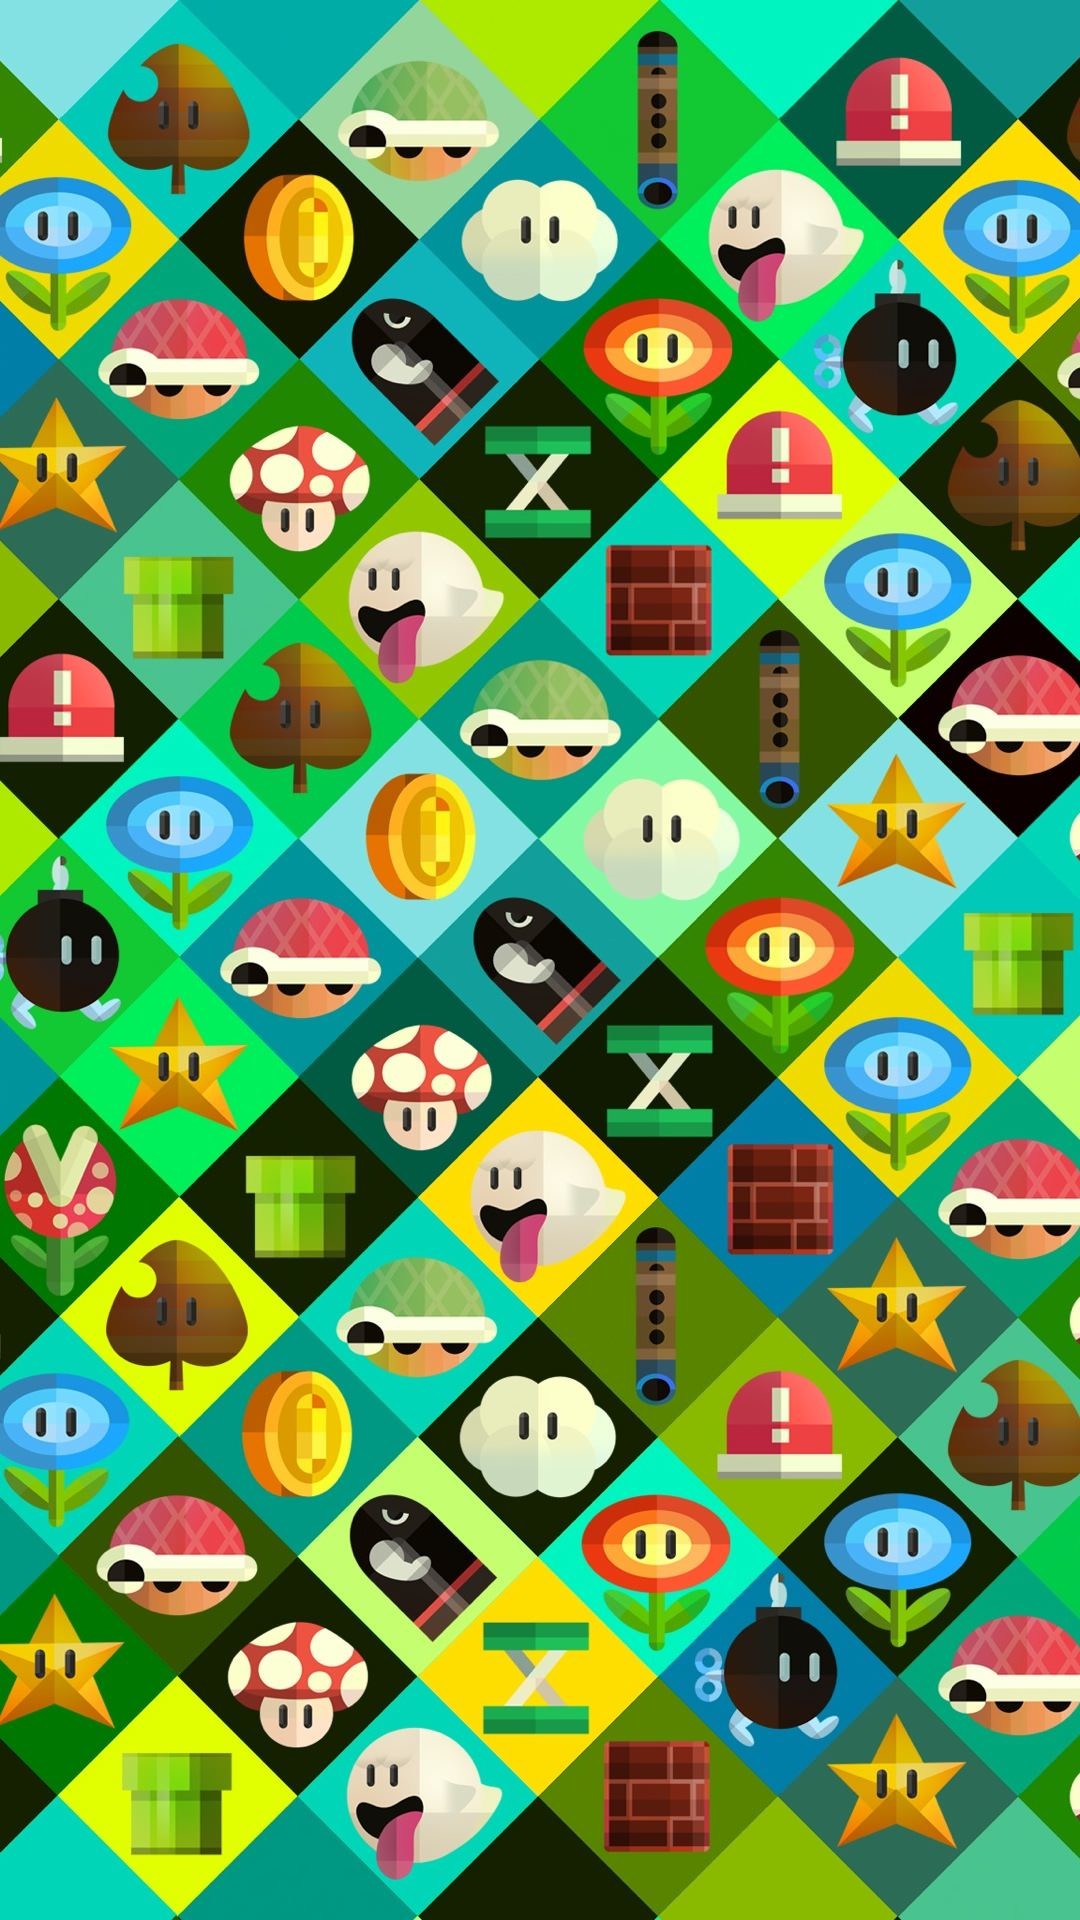 1080x1920 [iPhone wallpaper] Super Mario characters